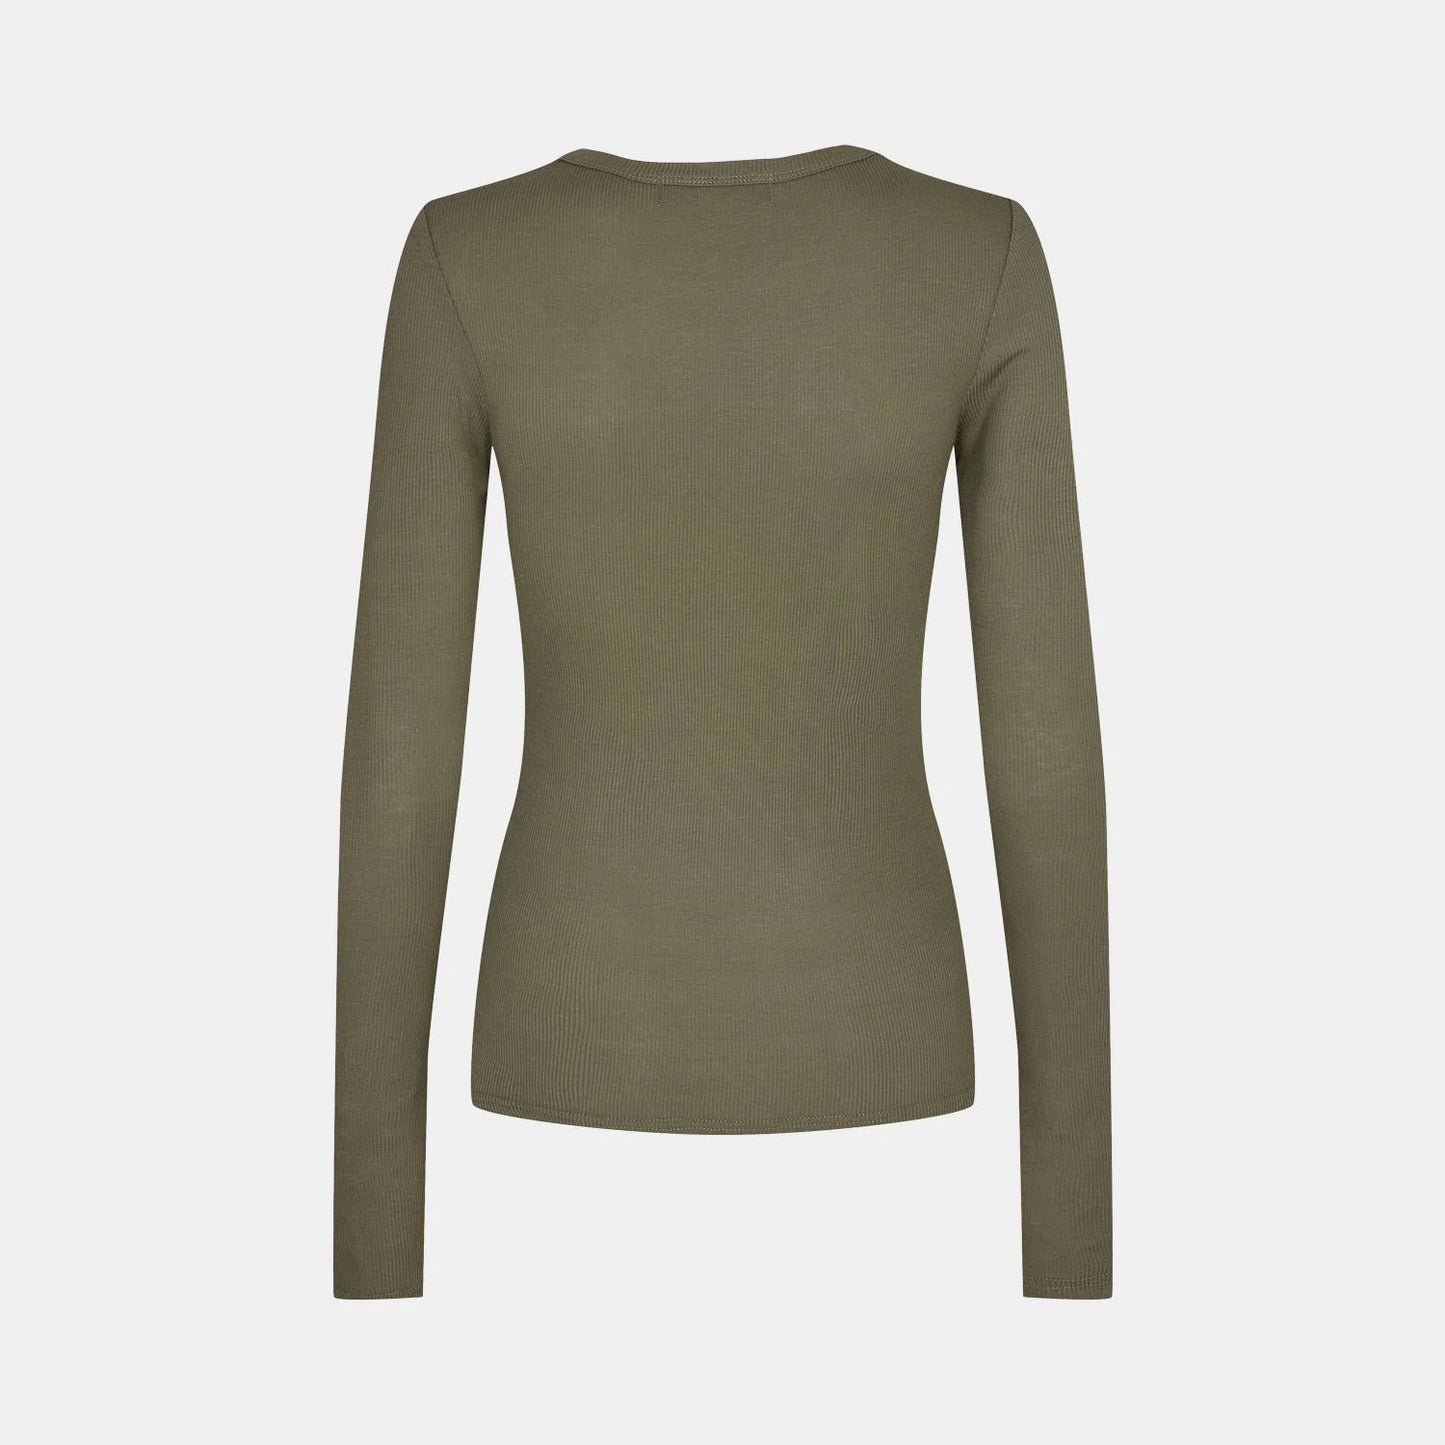 Sofie Schnoor Petricia T-shirt long sleeve, Army grøn